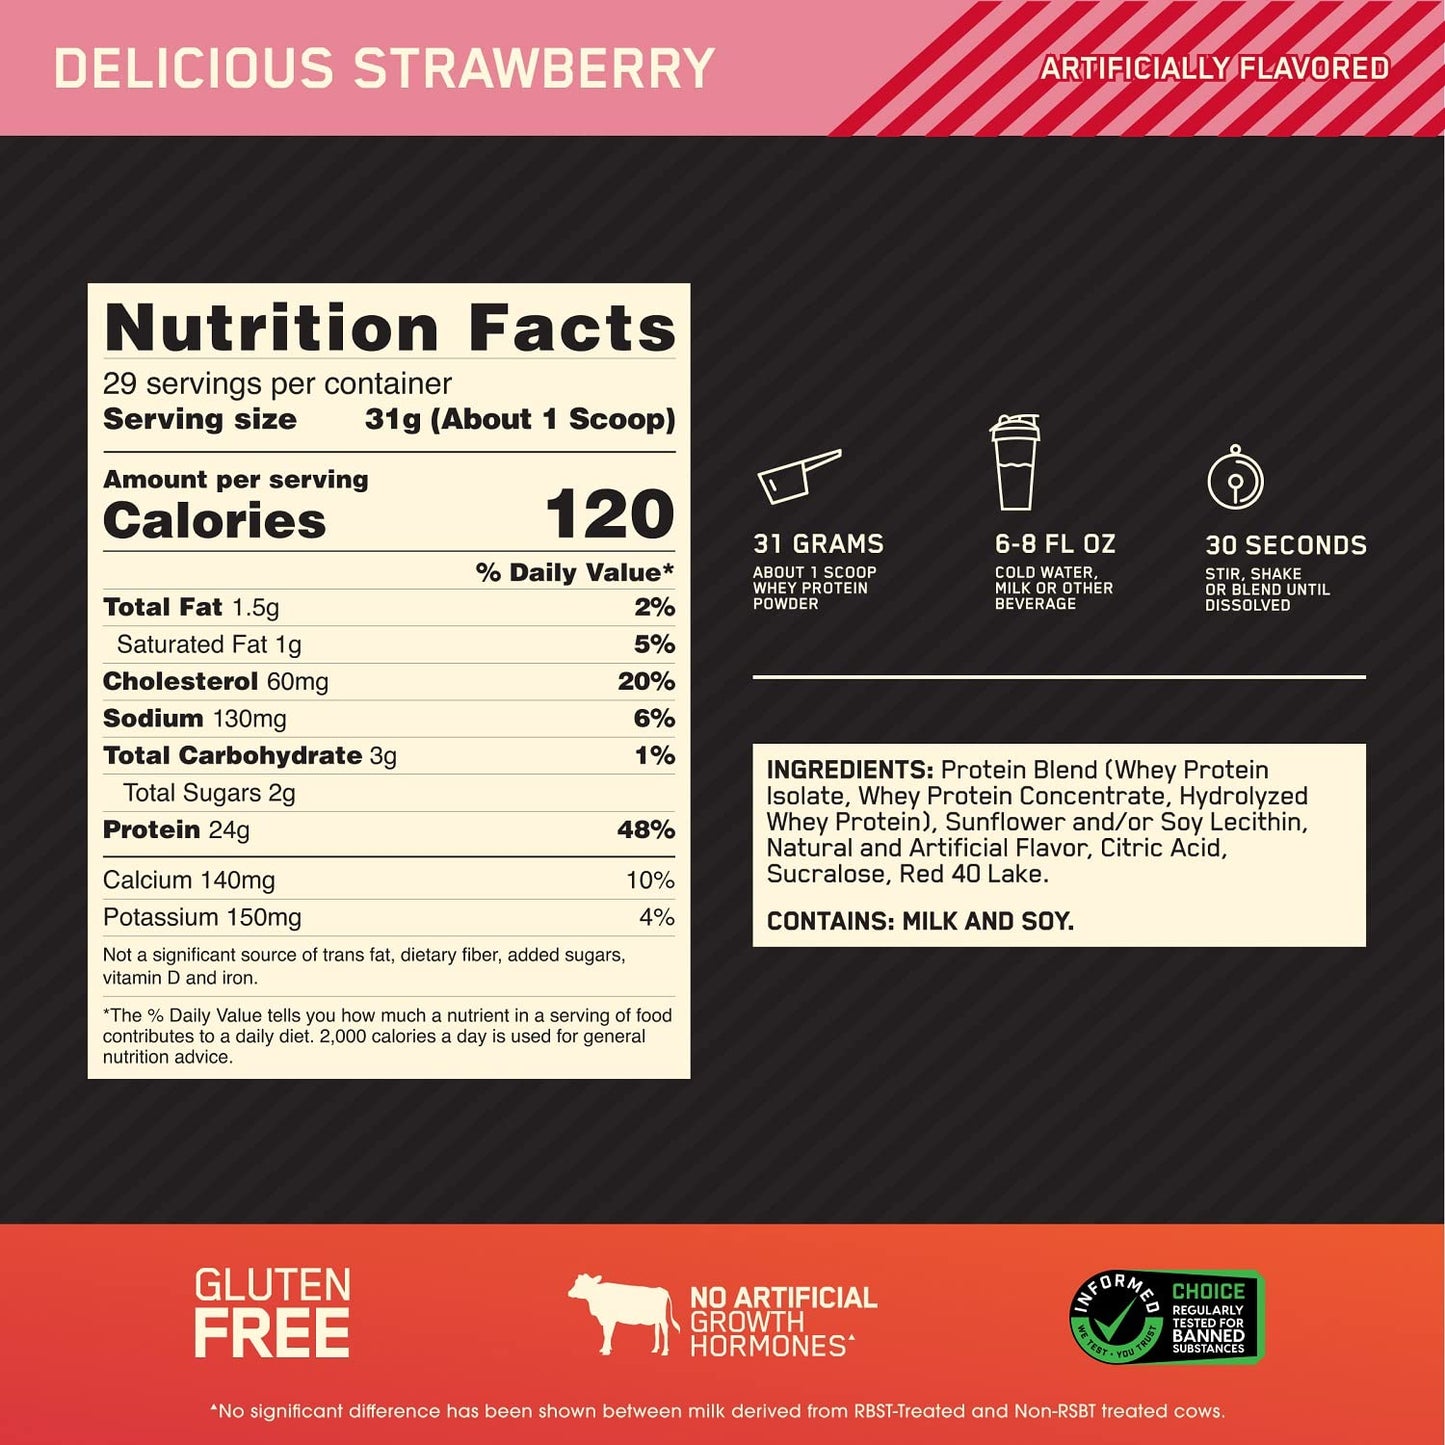 Gold Standard 100% Whey Protein Powder | Strawberry 2 lbs